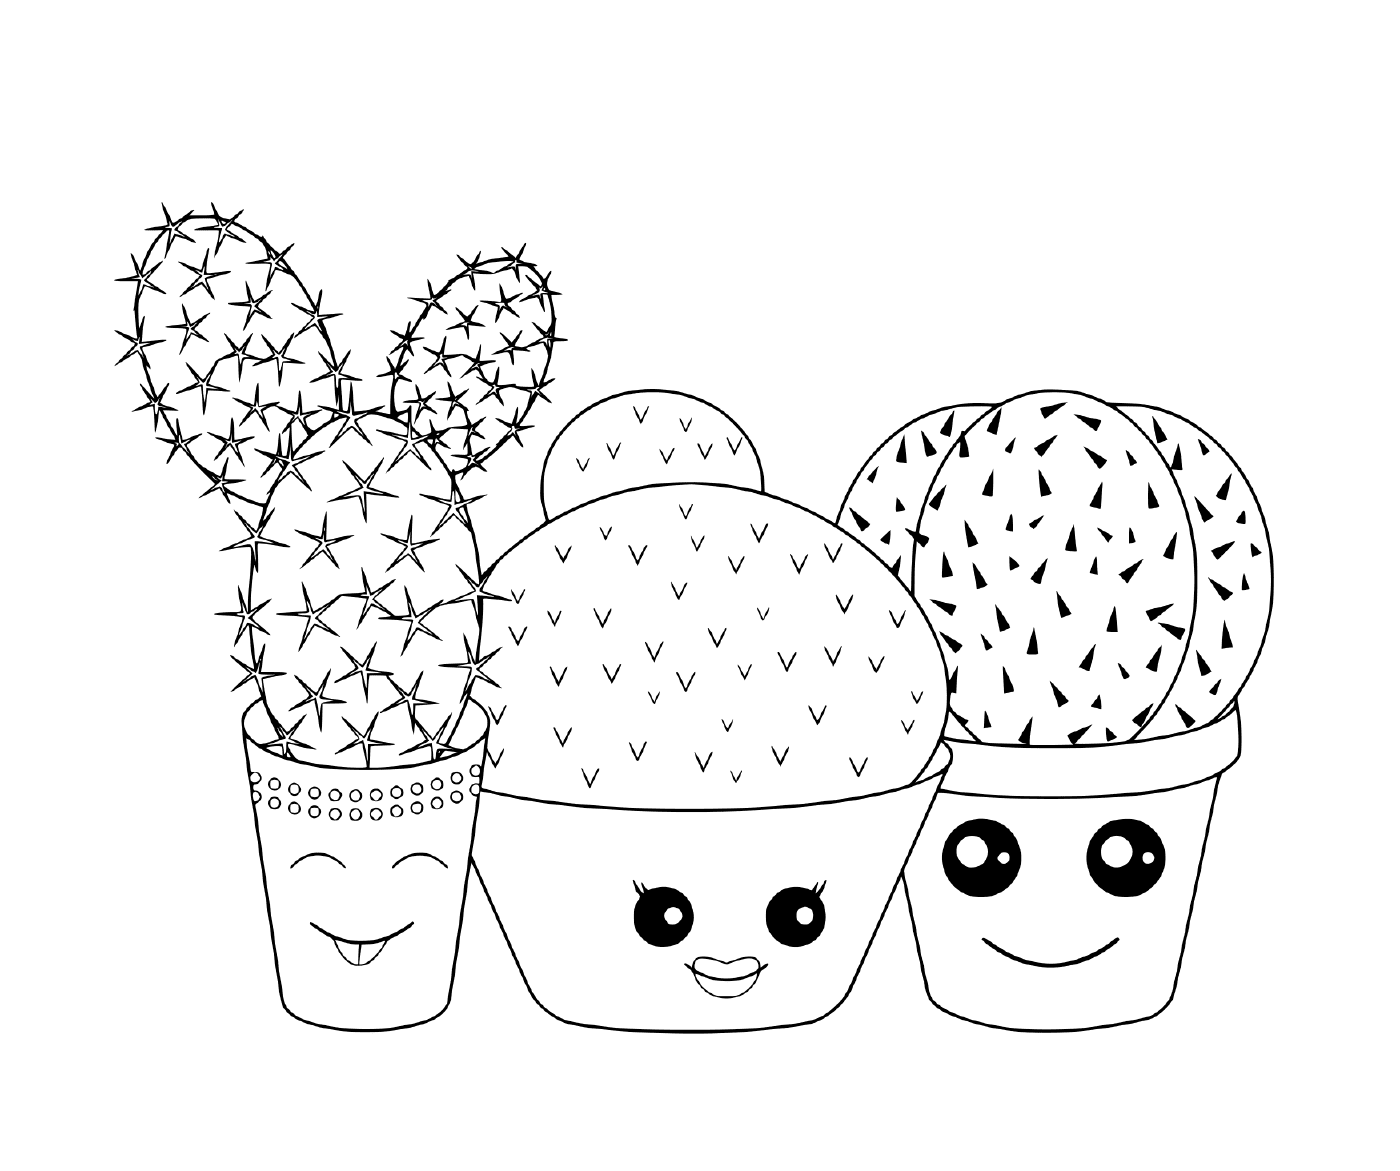  Süß grüner Kaktus 